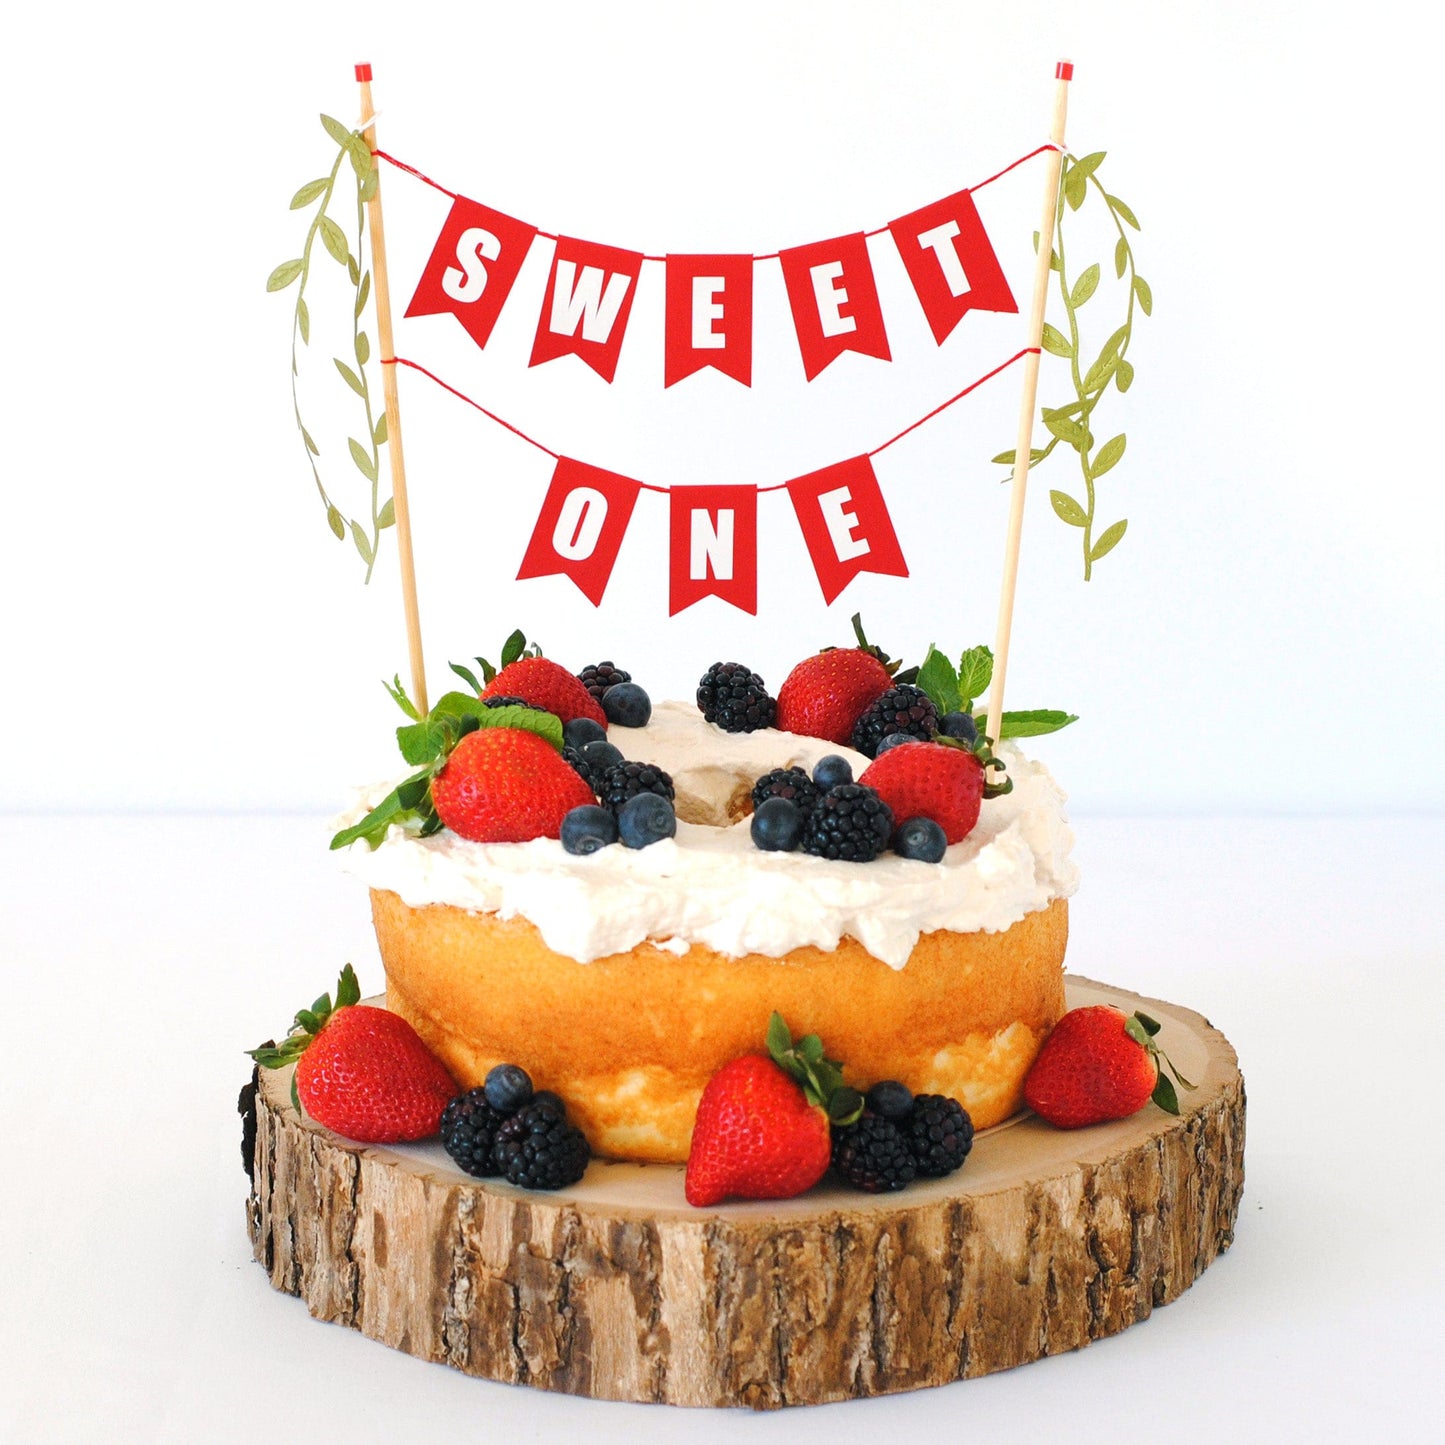 Berry Sweet One Birthday Cake Topper